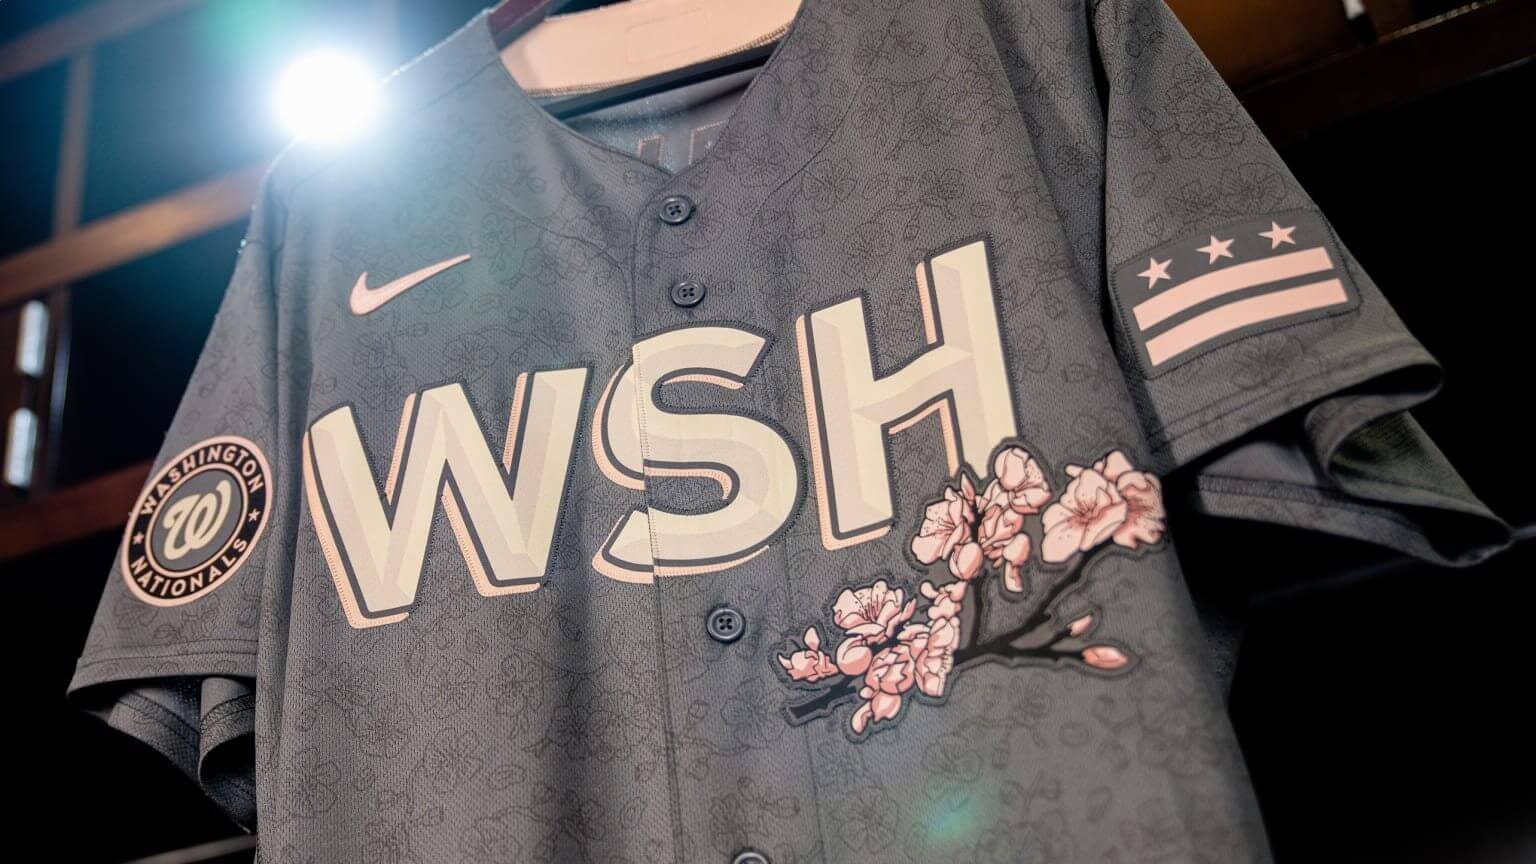 wizards cherry blossom jersey leak